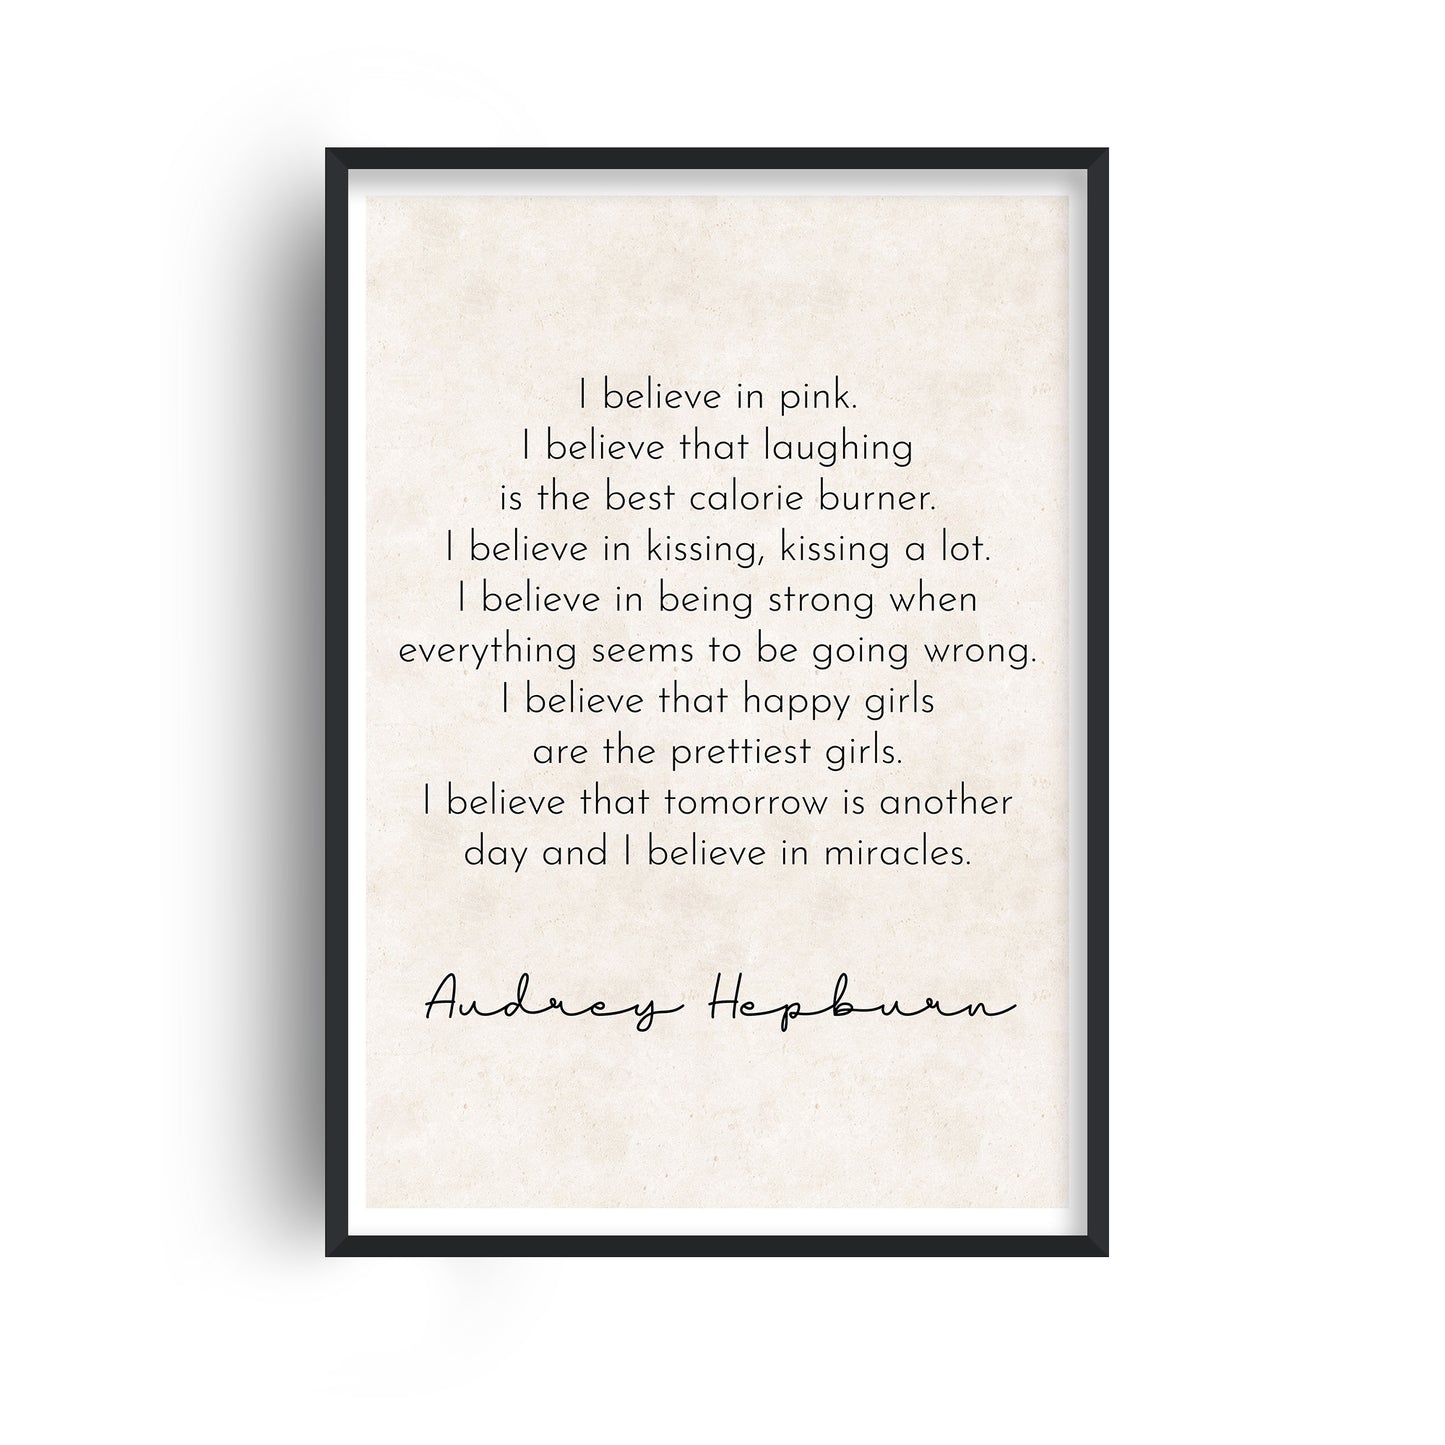 Happy Girls Are The Prettiest - Audrey Hepburn Quote Print